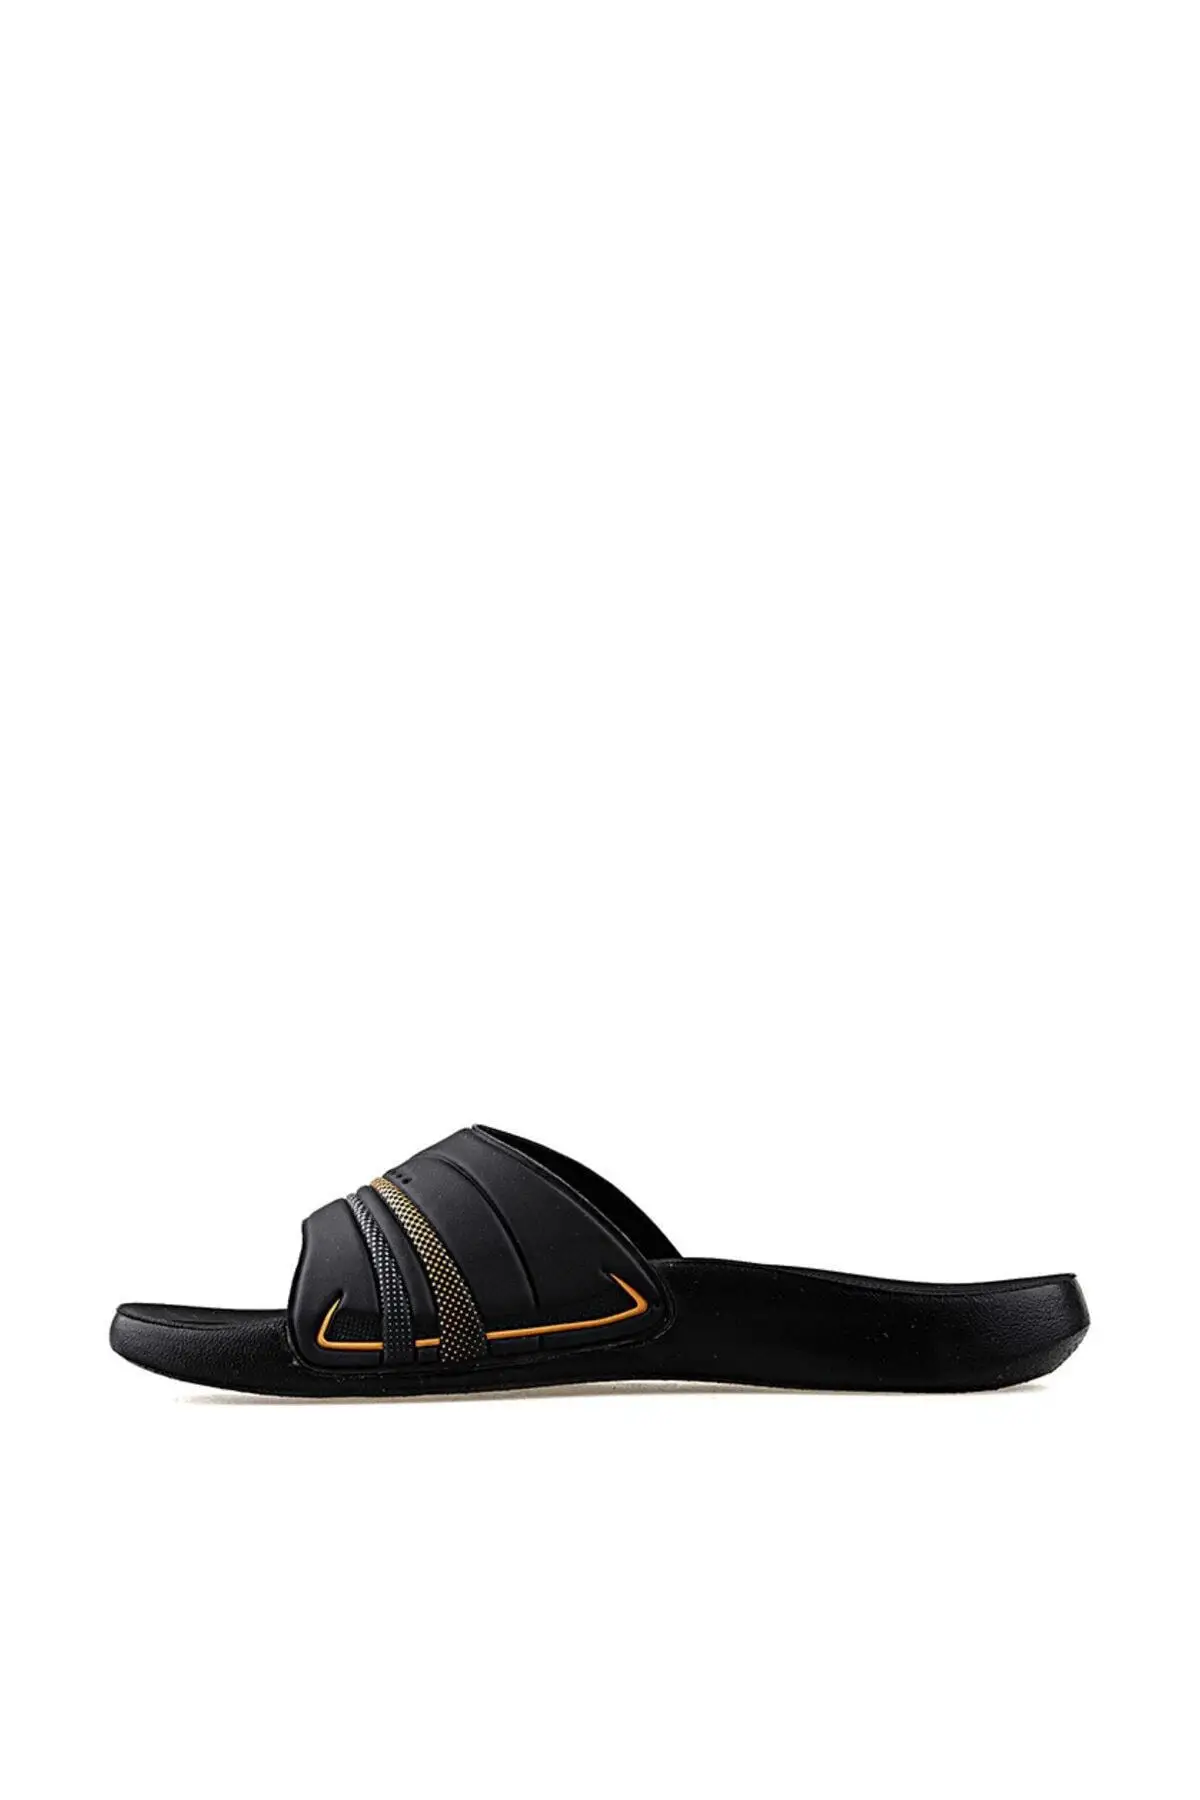 Ceyo male slippers 9100-8 Male Slippers-Black-43